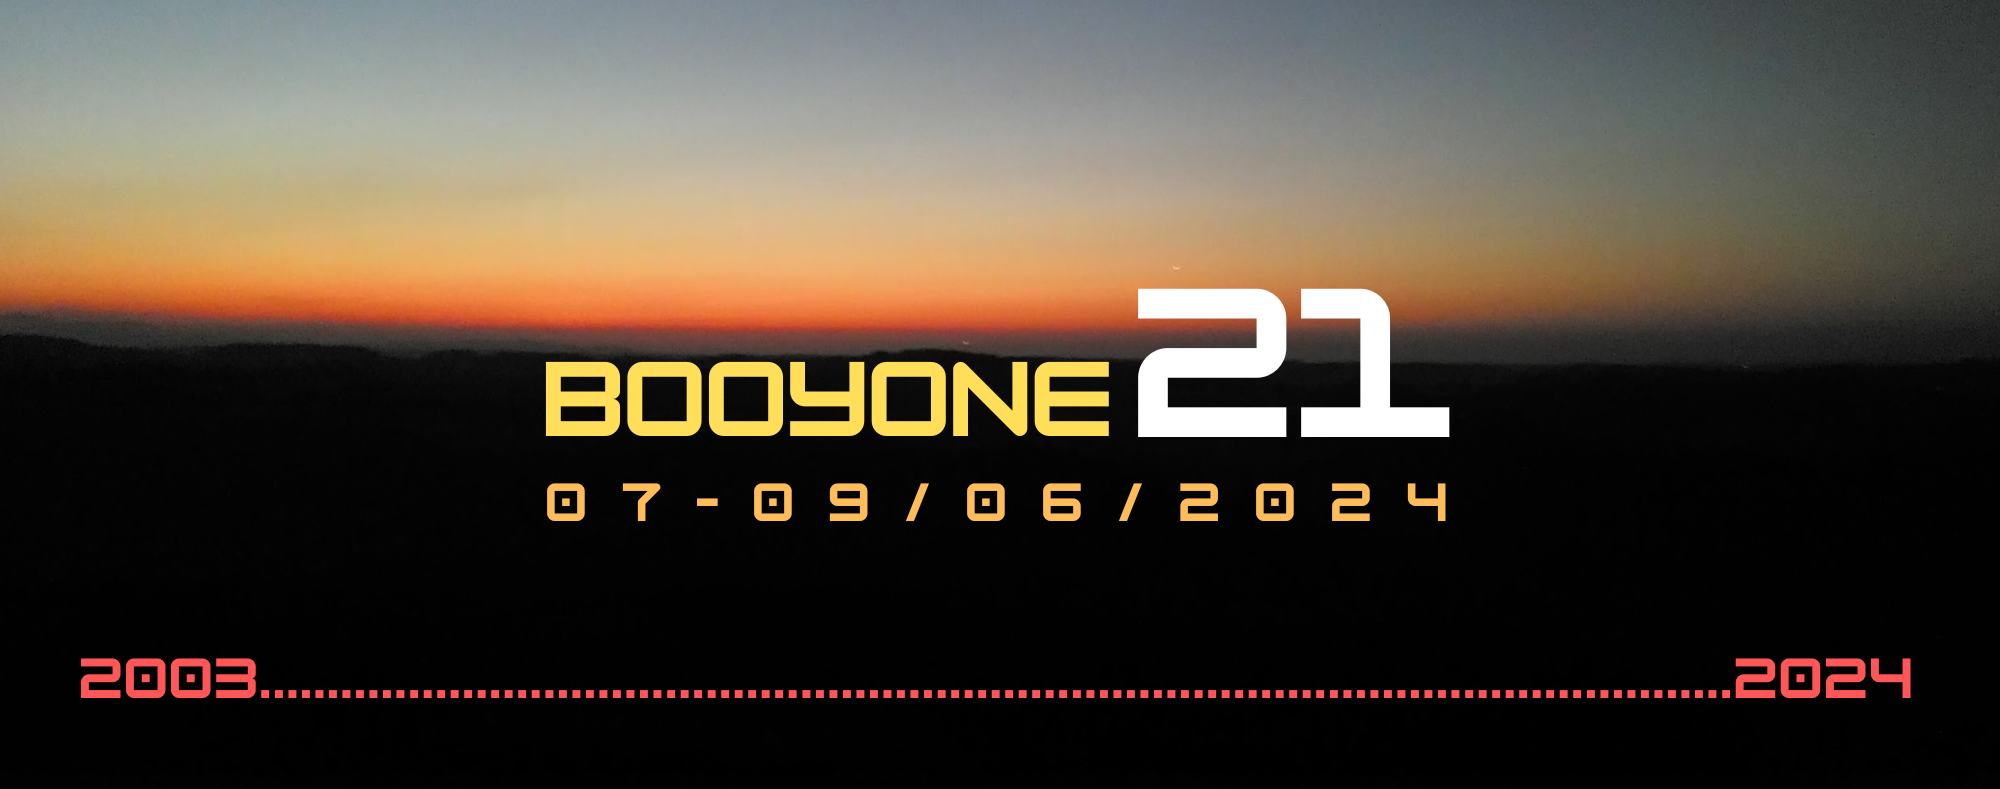 BooYone19: 2003 - 2024